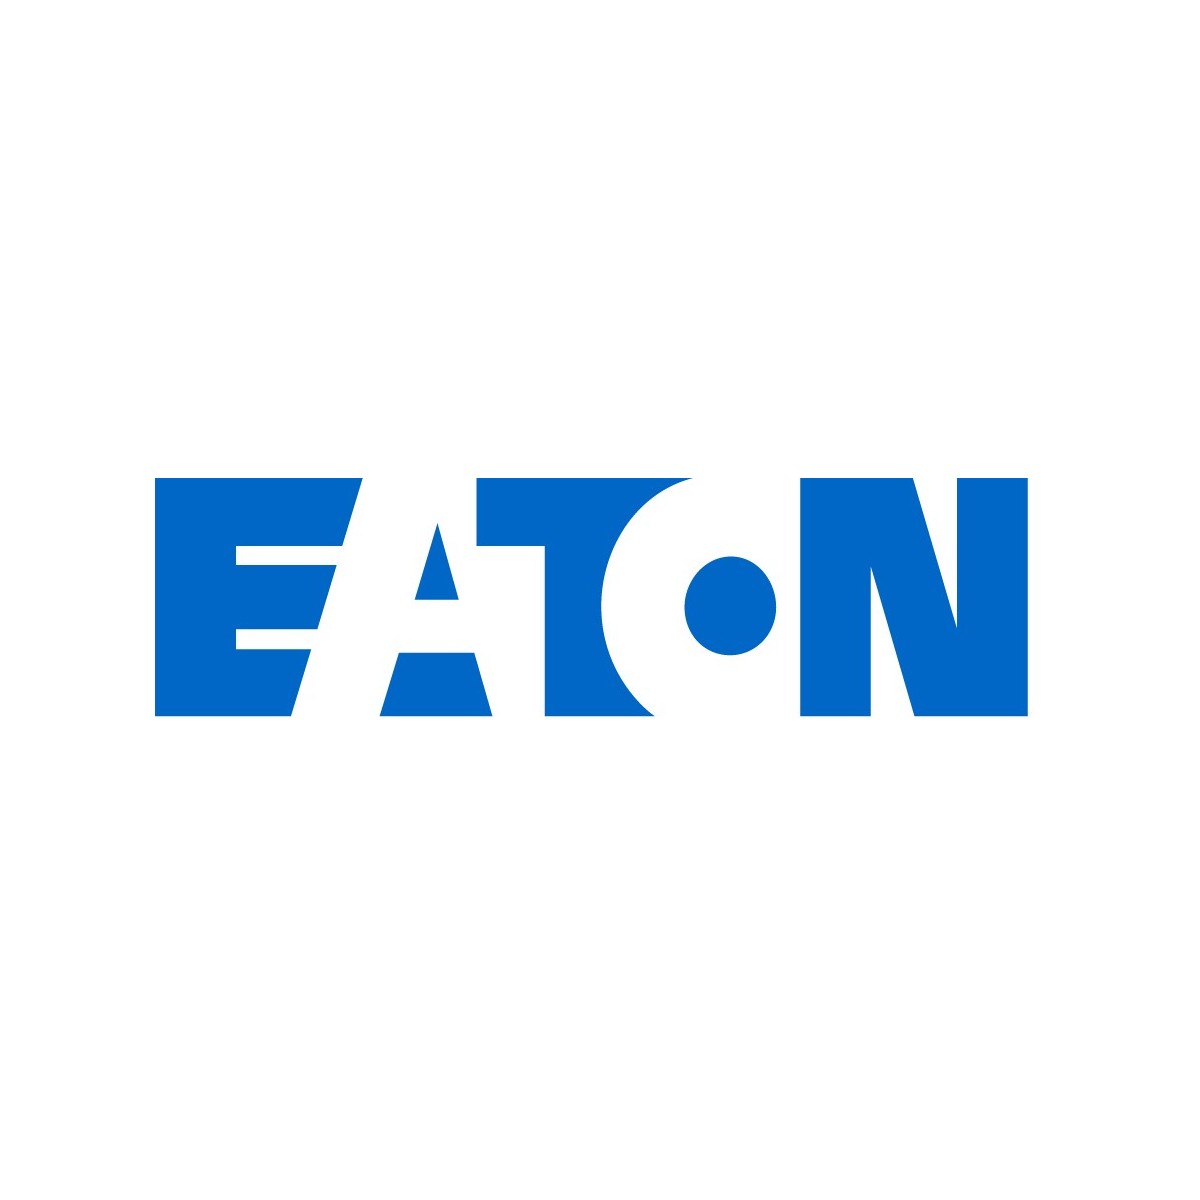 Eaton Gewährleistungsverlängerung Warranty+3 Product 08